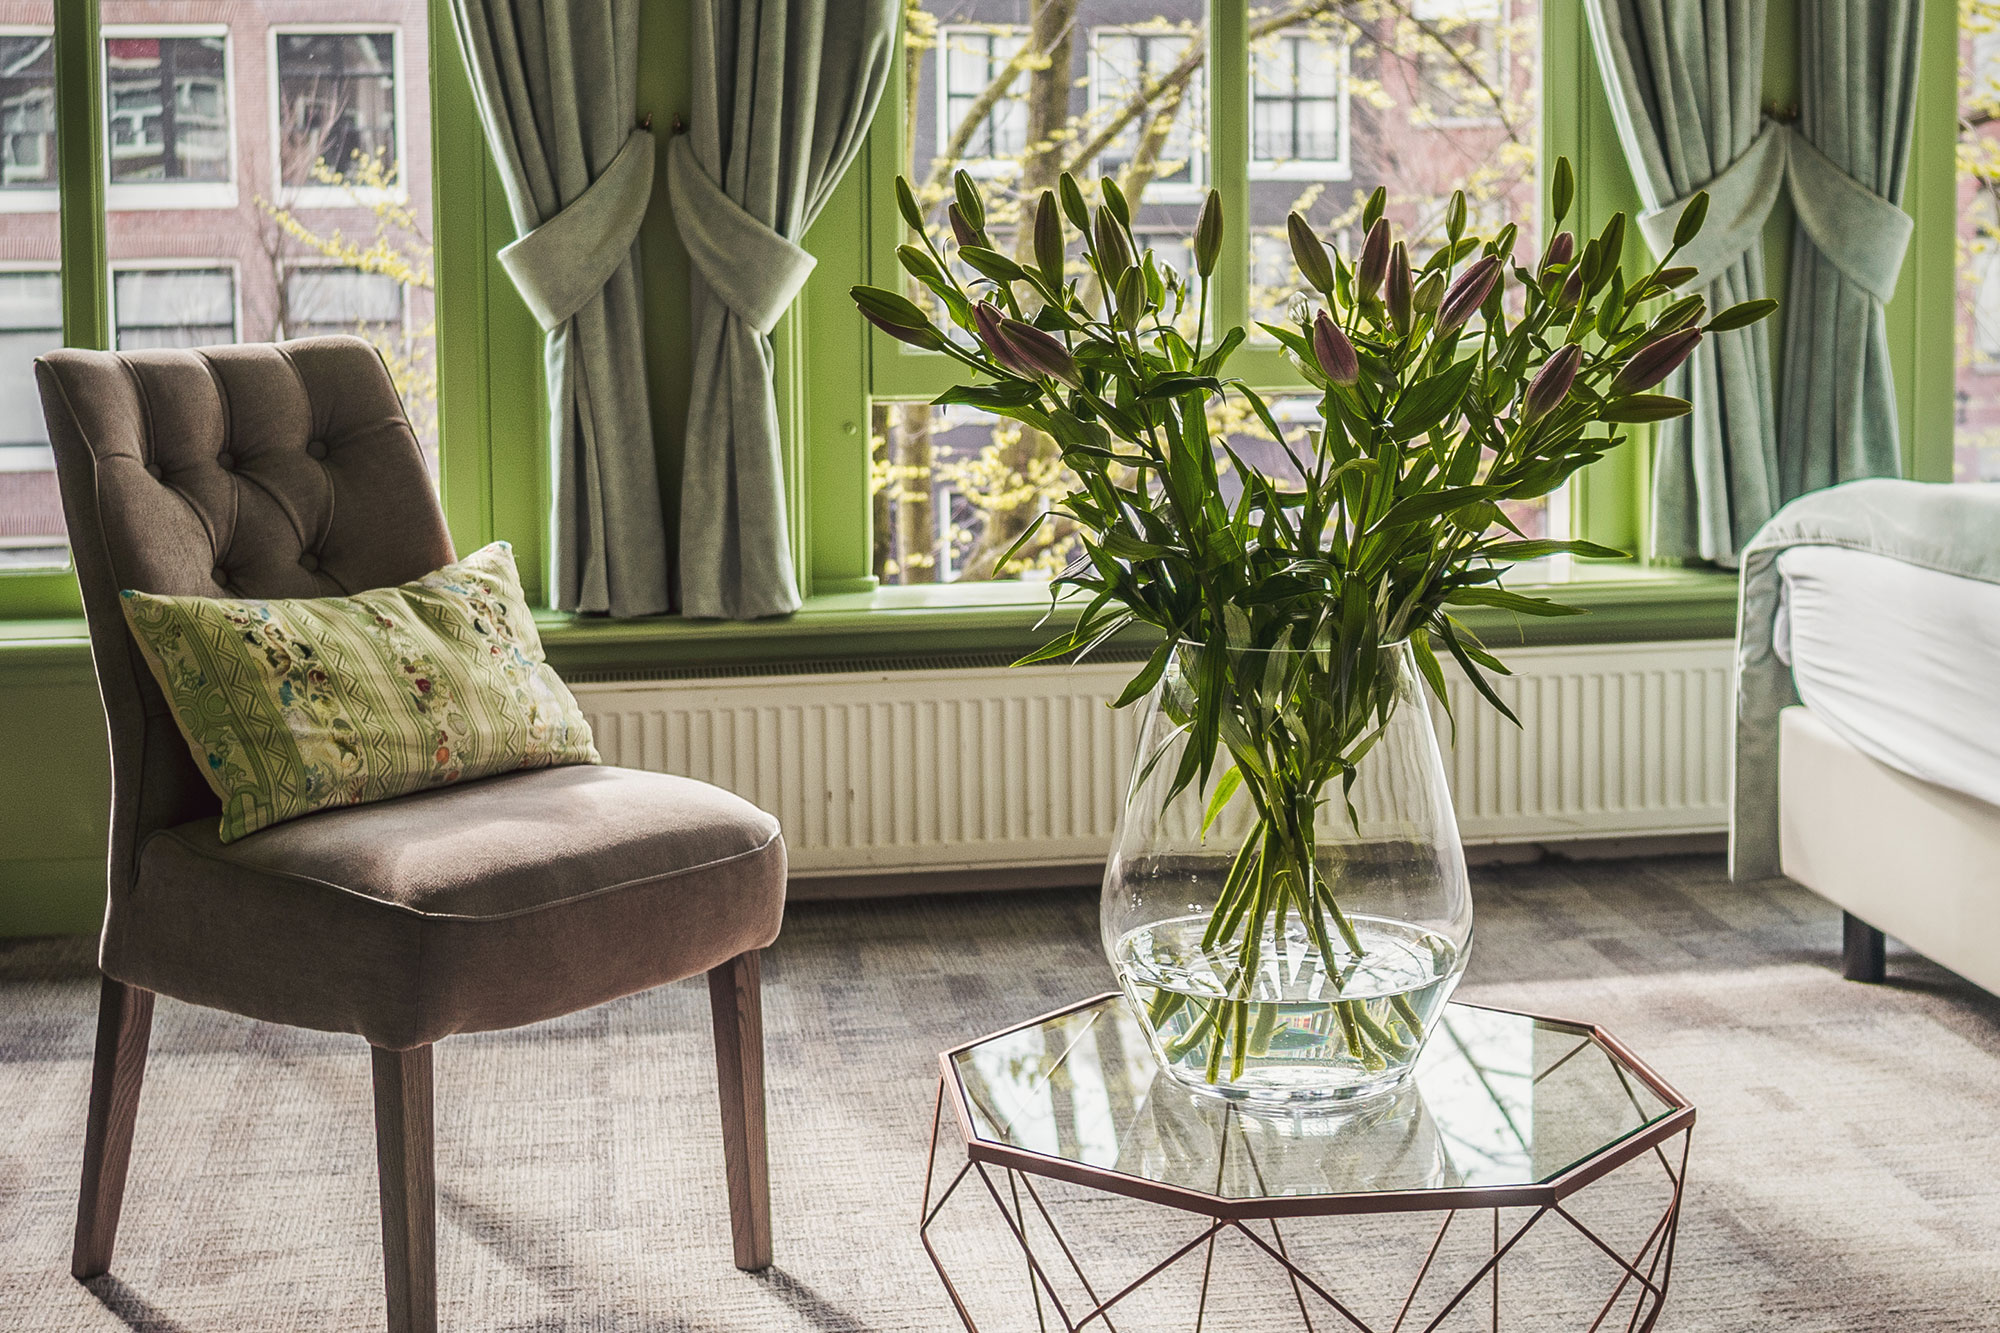 amsterdam-t-hotel-family-room-4-flowers